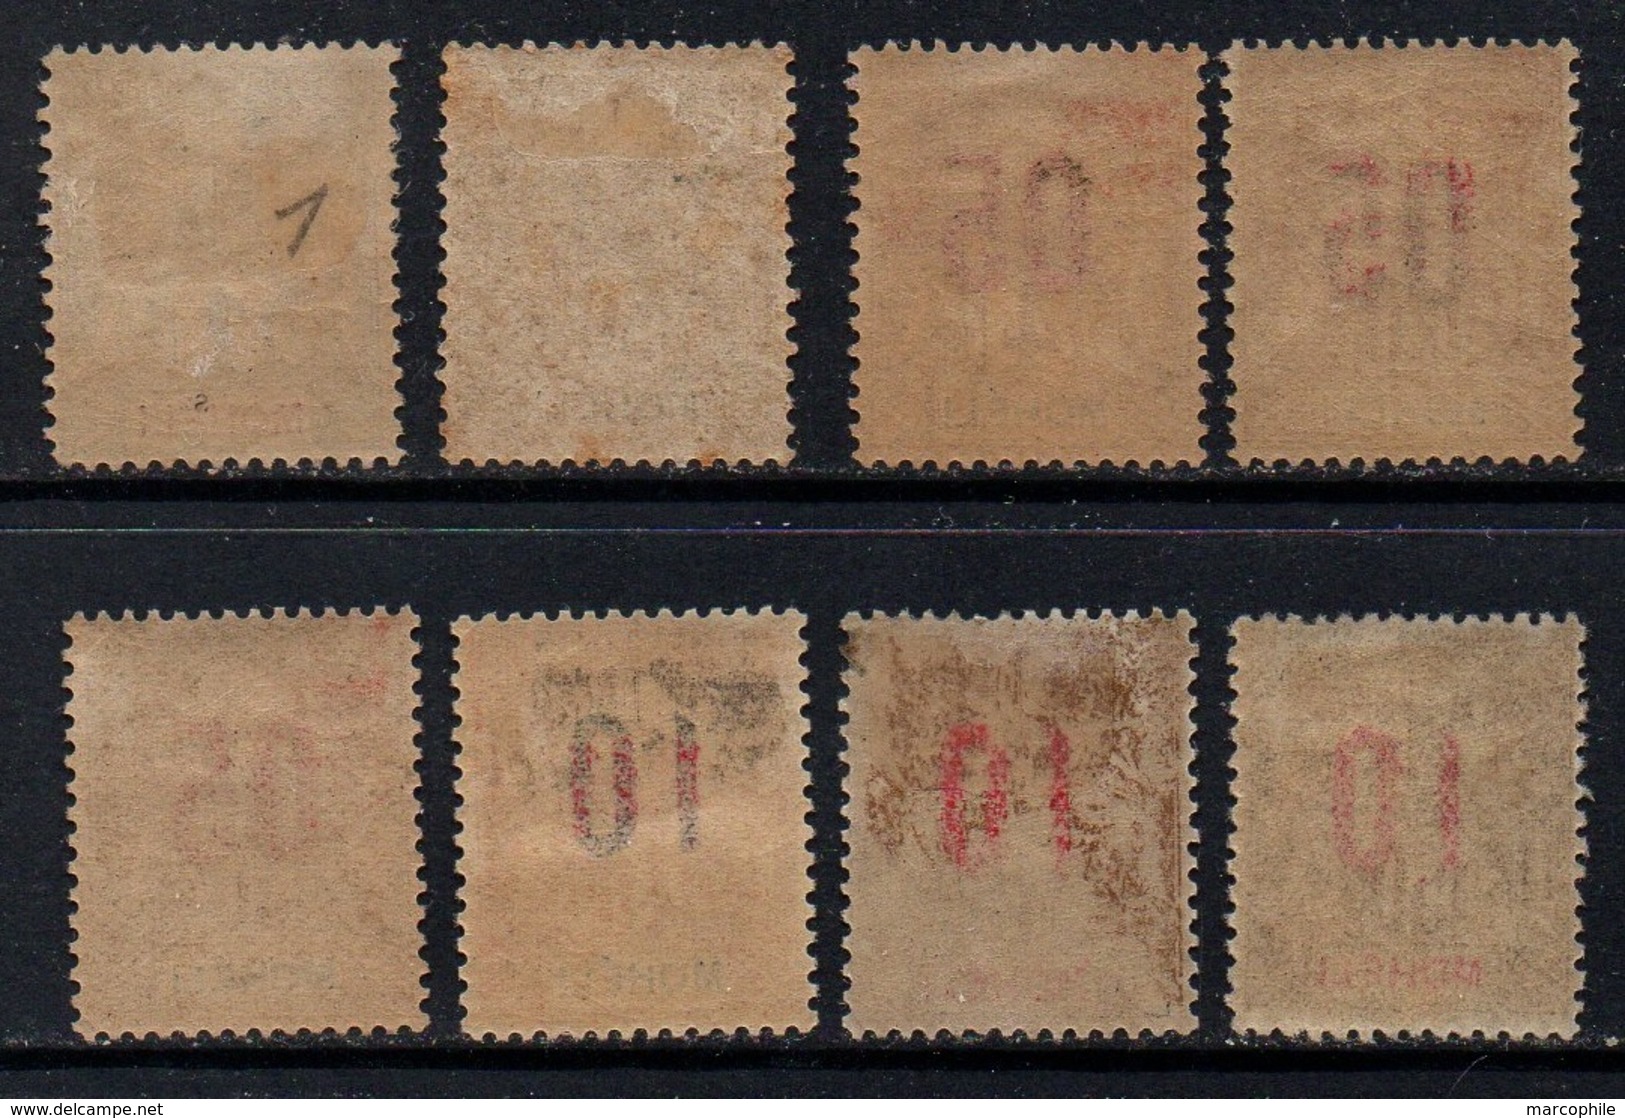 MOHELI / ENSEMBLE DE TIMBRES * / COTE > 48.00 EUROS (ref 8013) - Unused Stamps